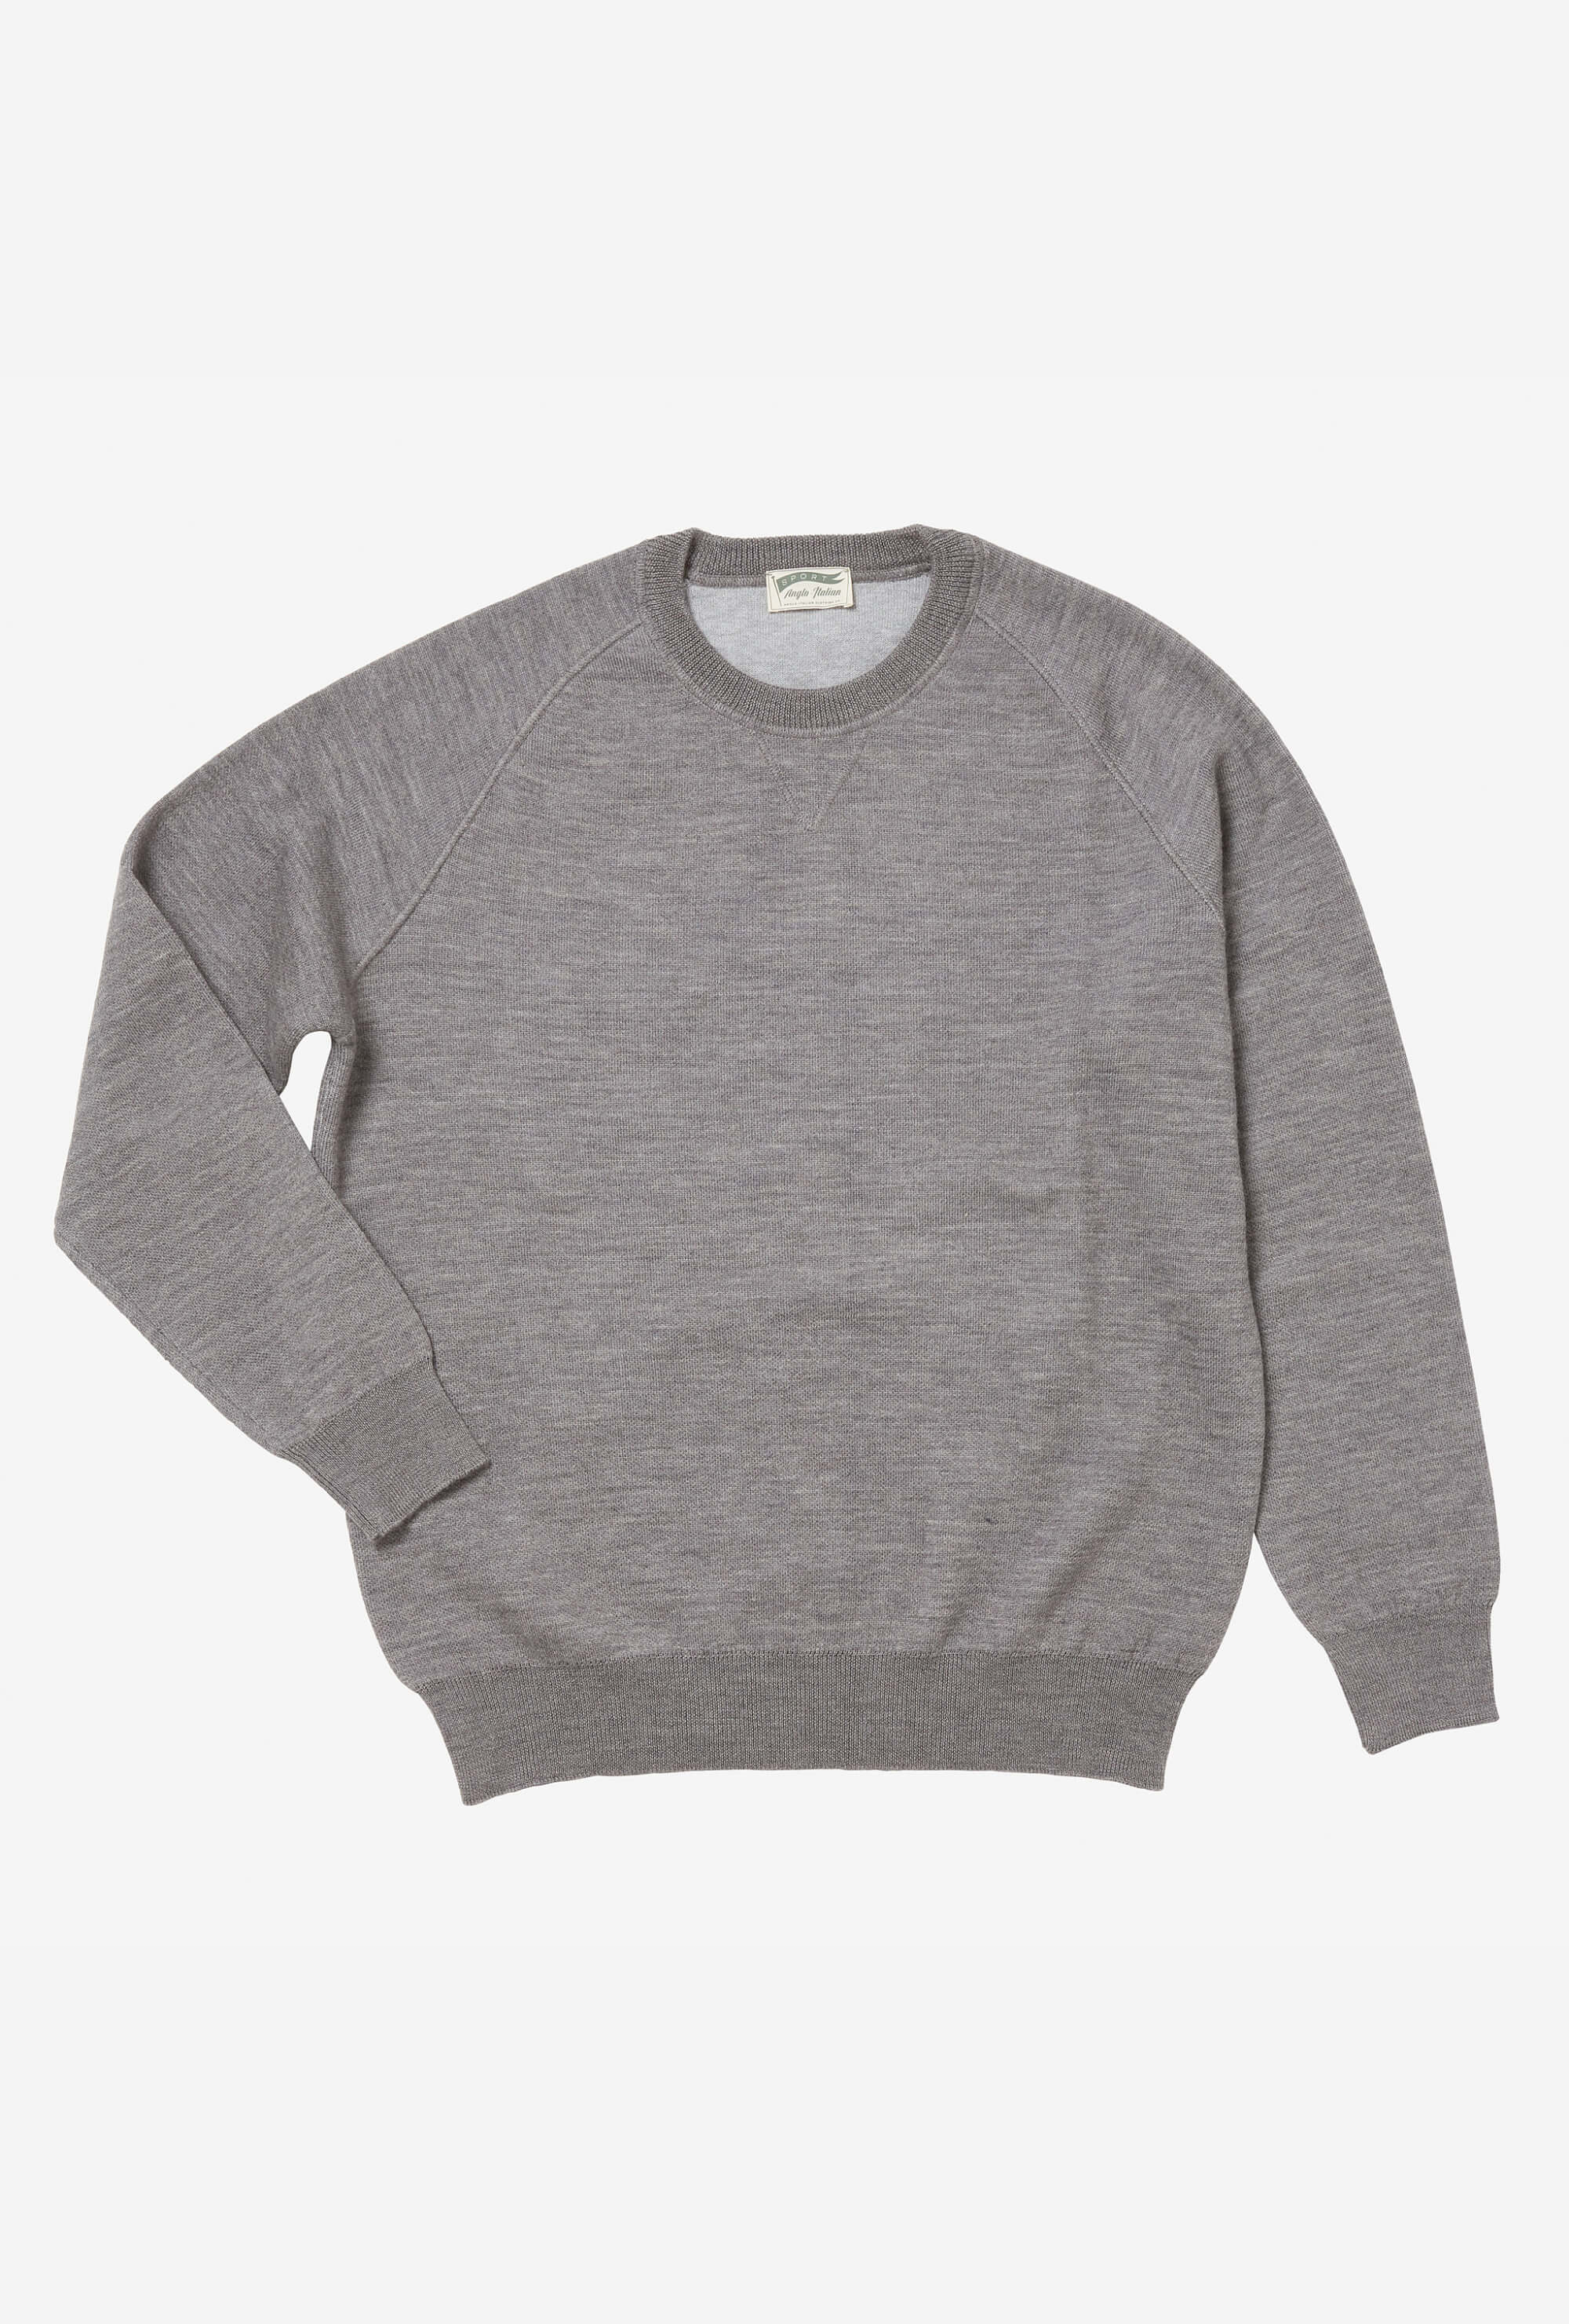 Sport Sweatshirt Merino Cotton Grey